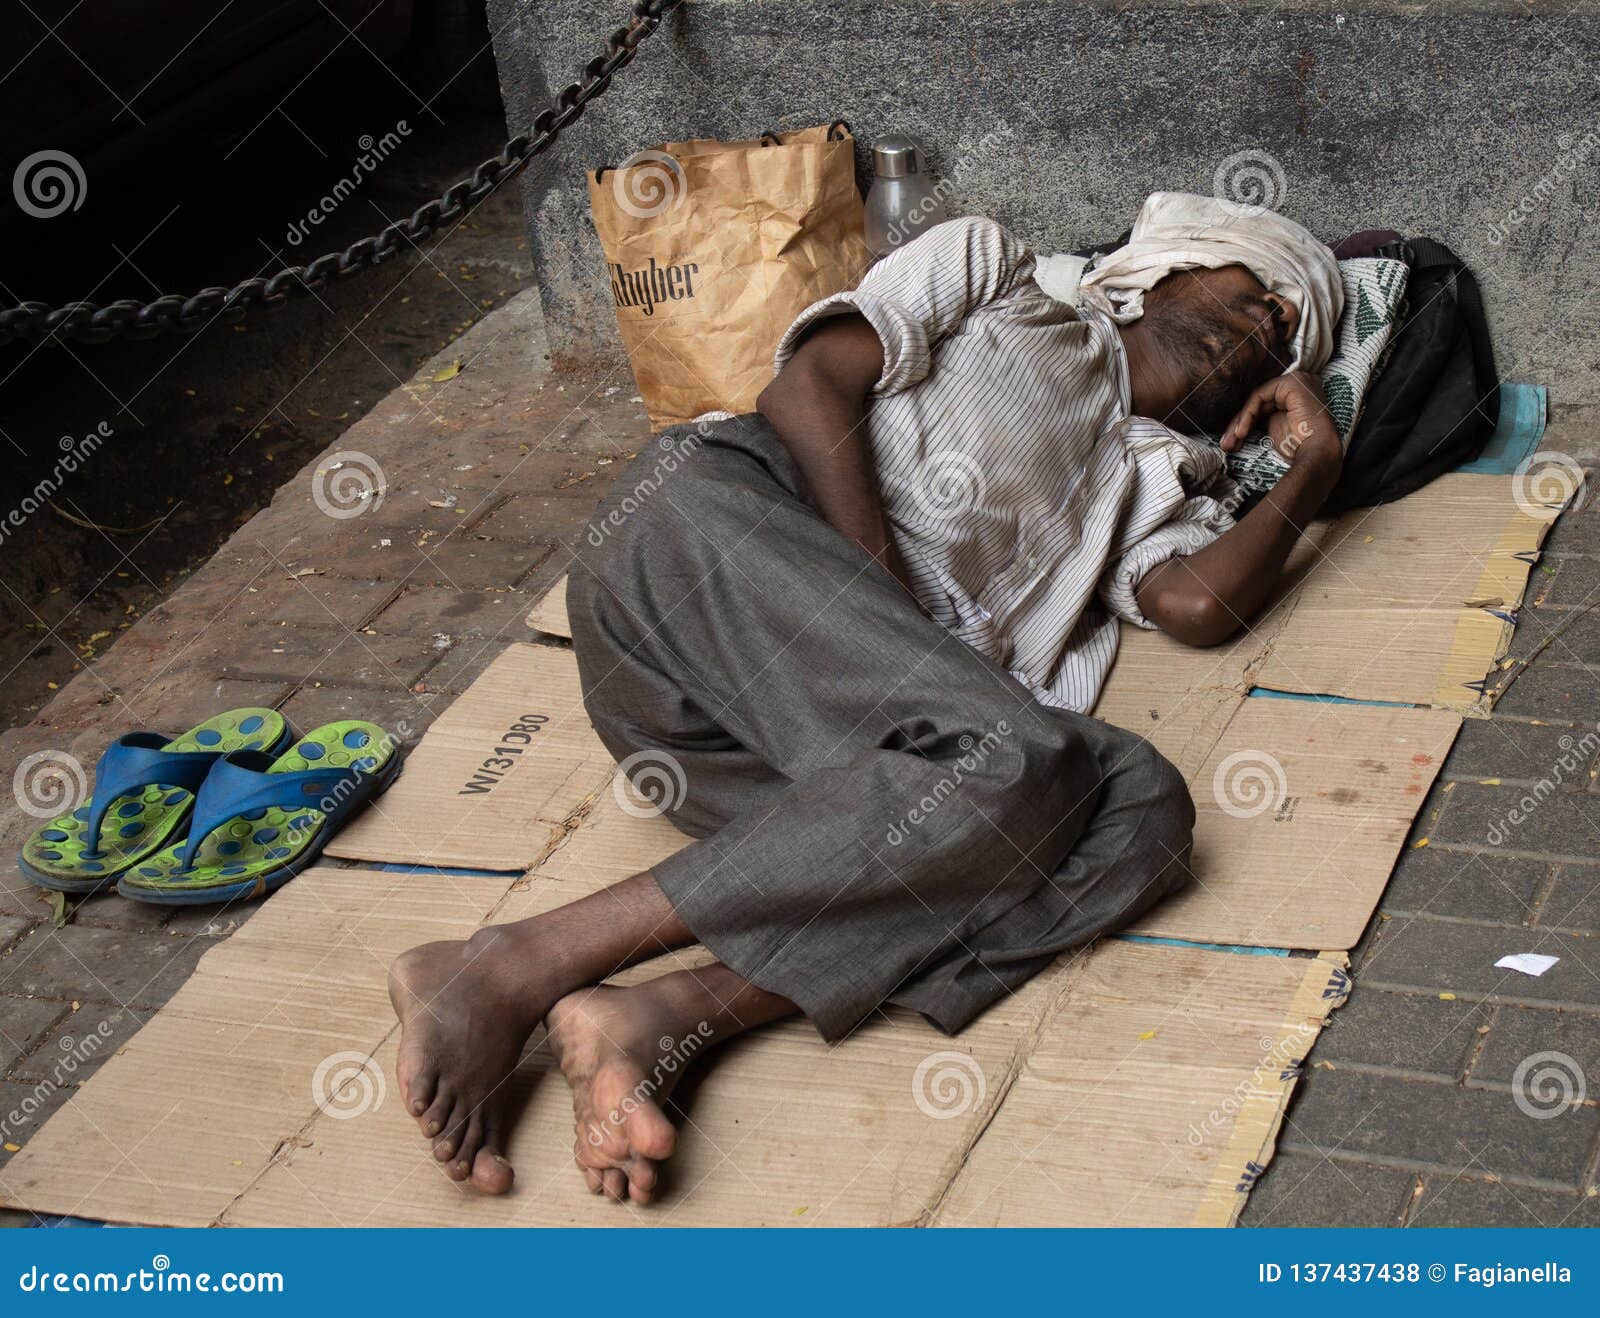 Mumbai India 20 November 2018 Homeless Man Sleeping In The Street